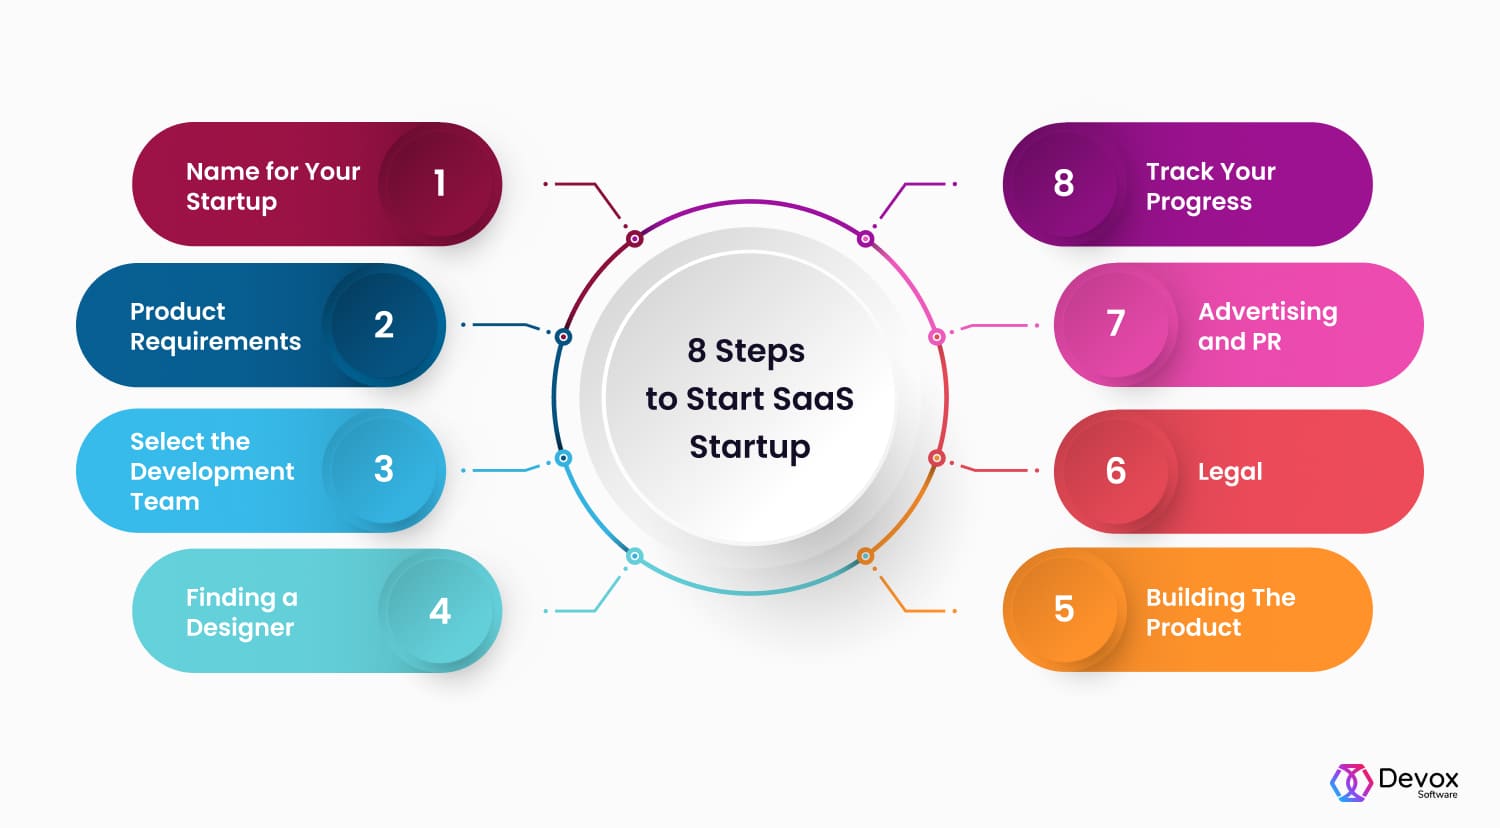 8 Steps to Start SaaS Startup